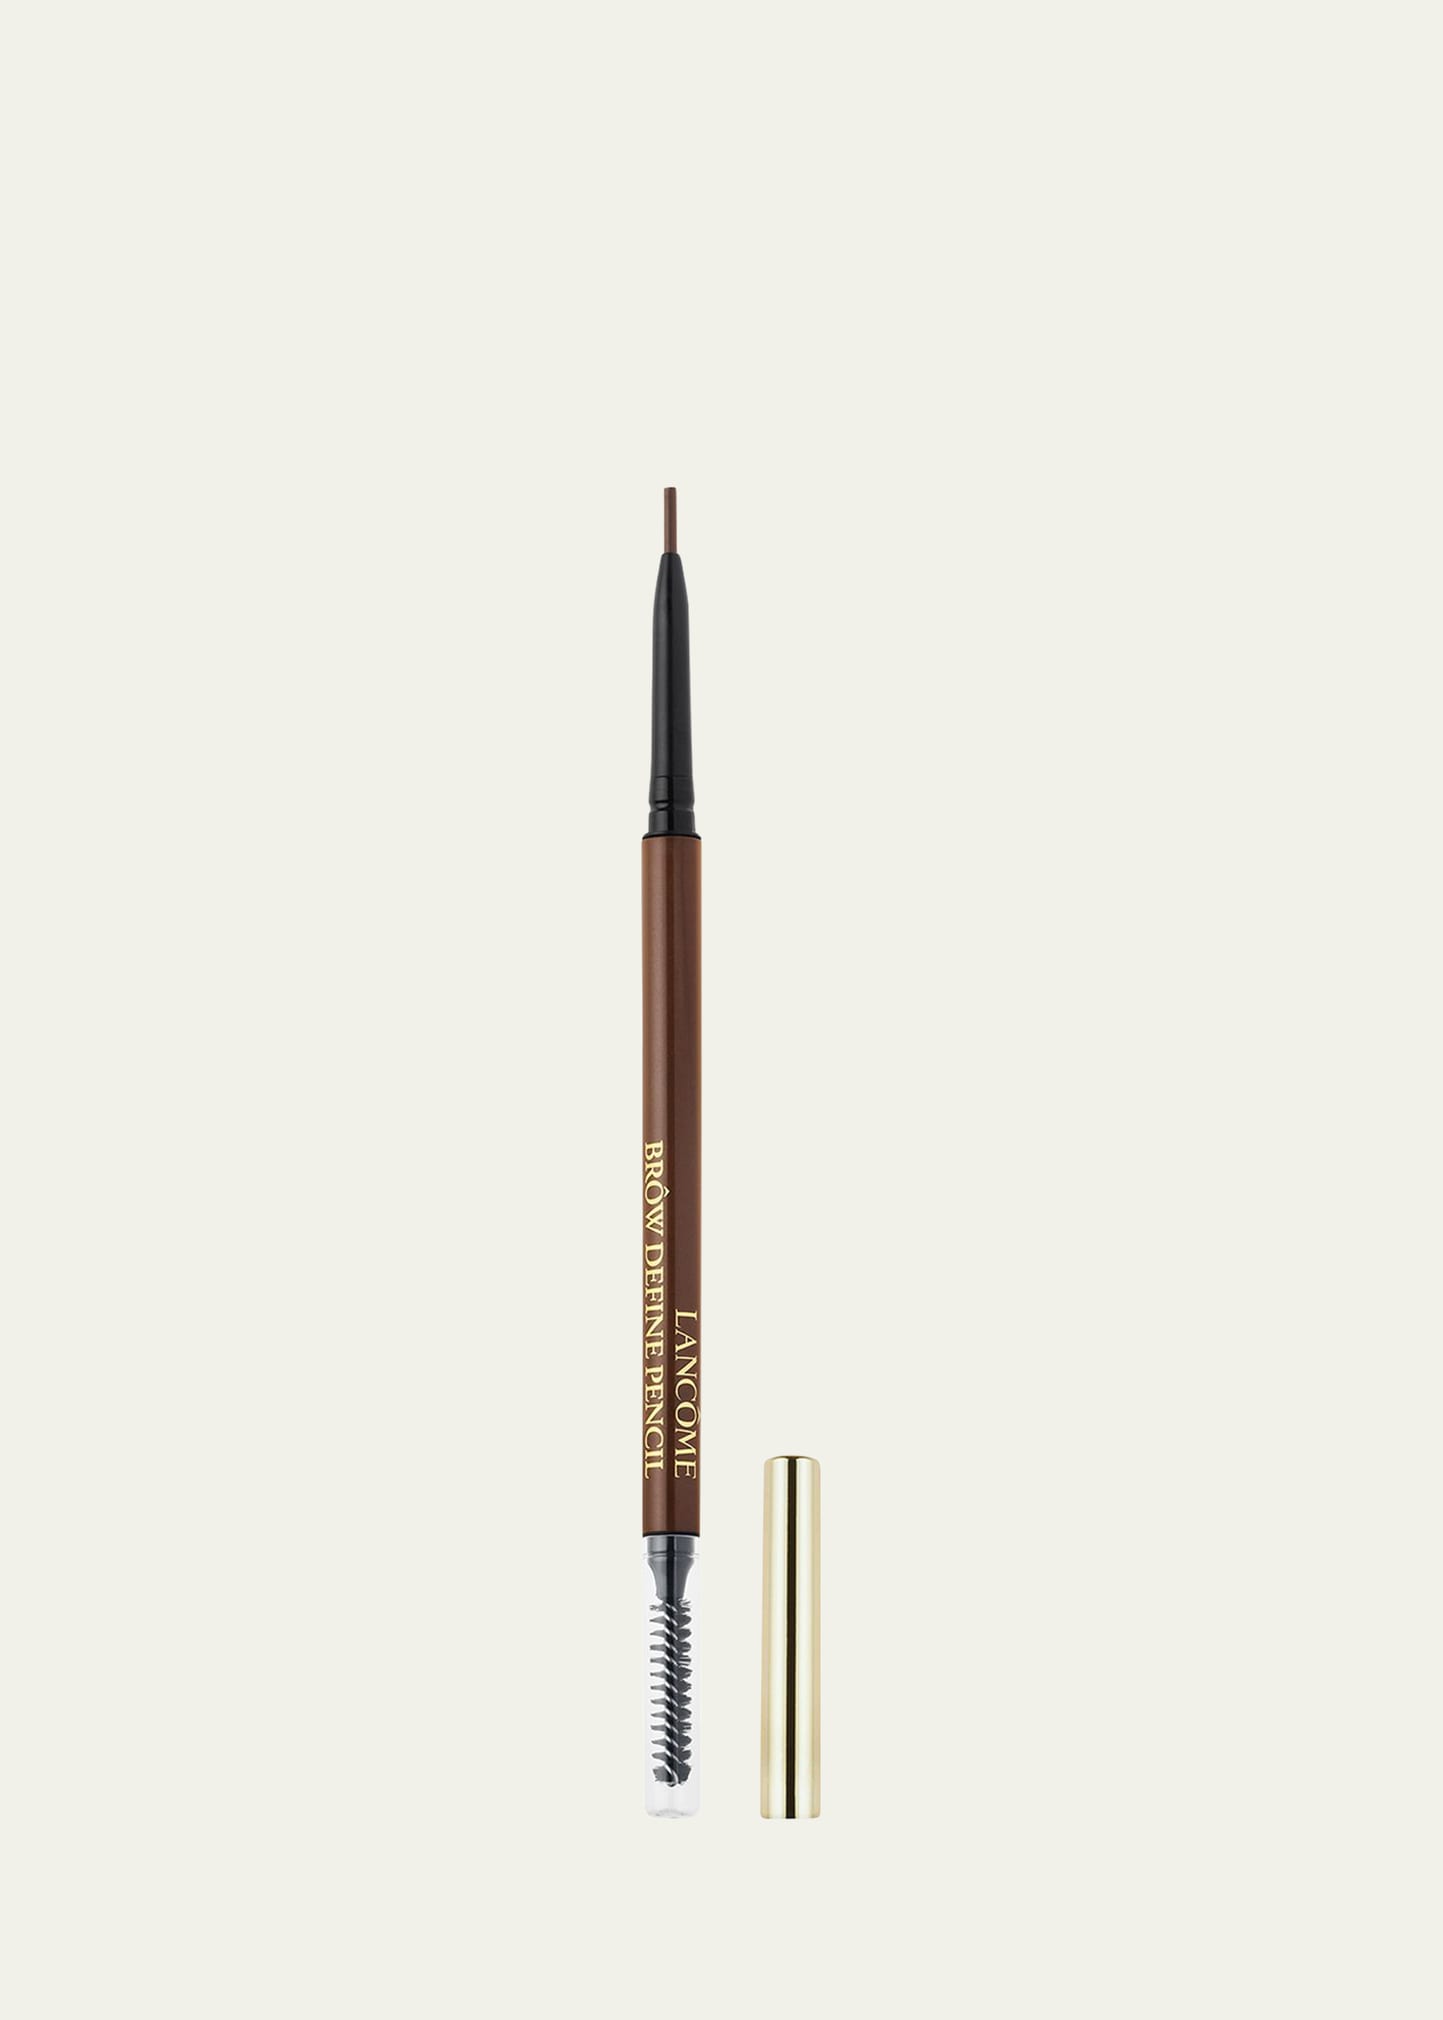 Lancôme Brow Define Pencil In White